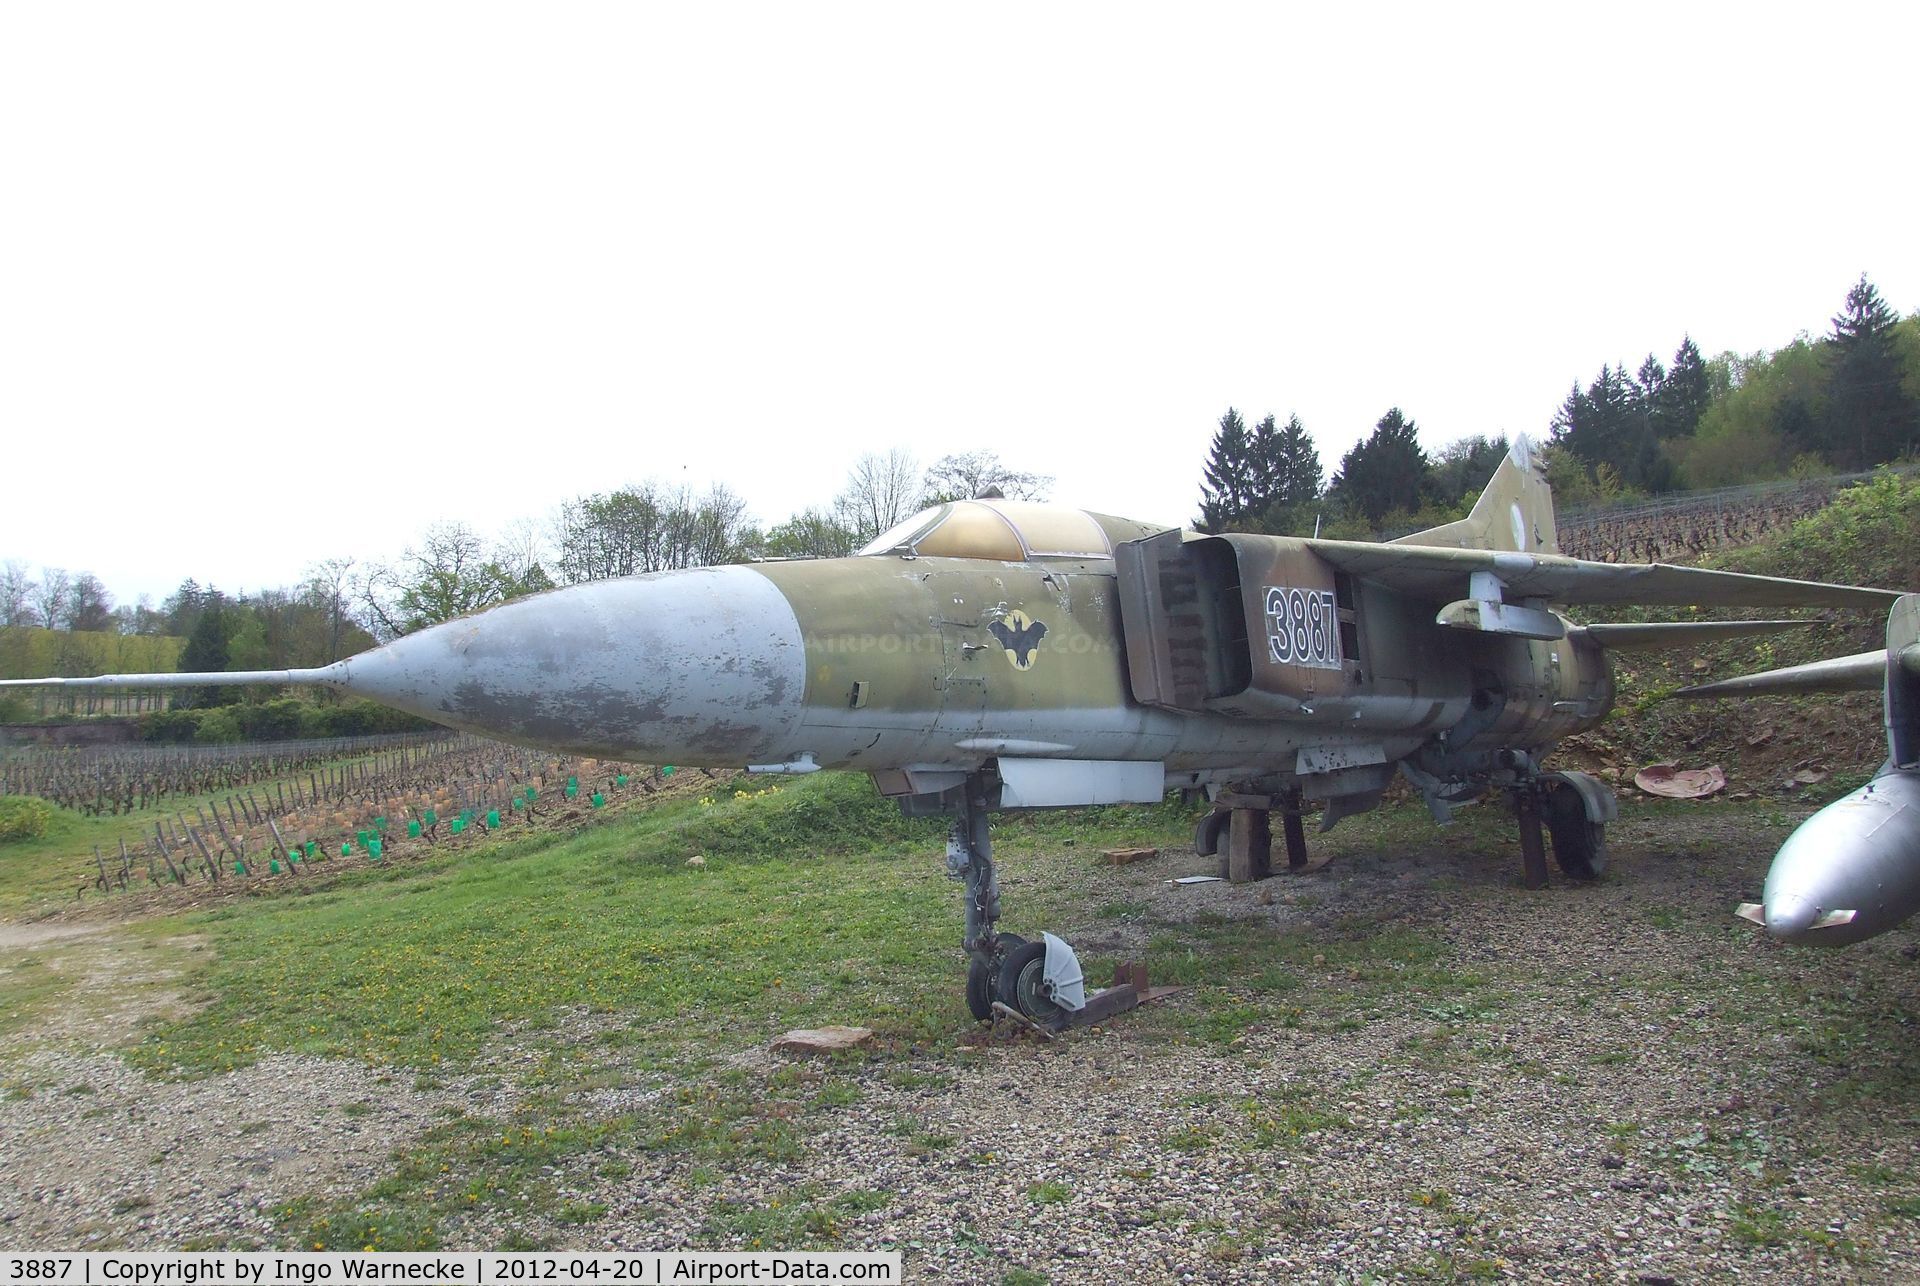 3887, Mikoyan-Gurevich MiG-23MF C/N 0390213887, Mikoyan i Gurevich MiG-23MF FLOGGER-B at the Musee de l'Aviation du Chateau, Savigny-les-Beaune